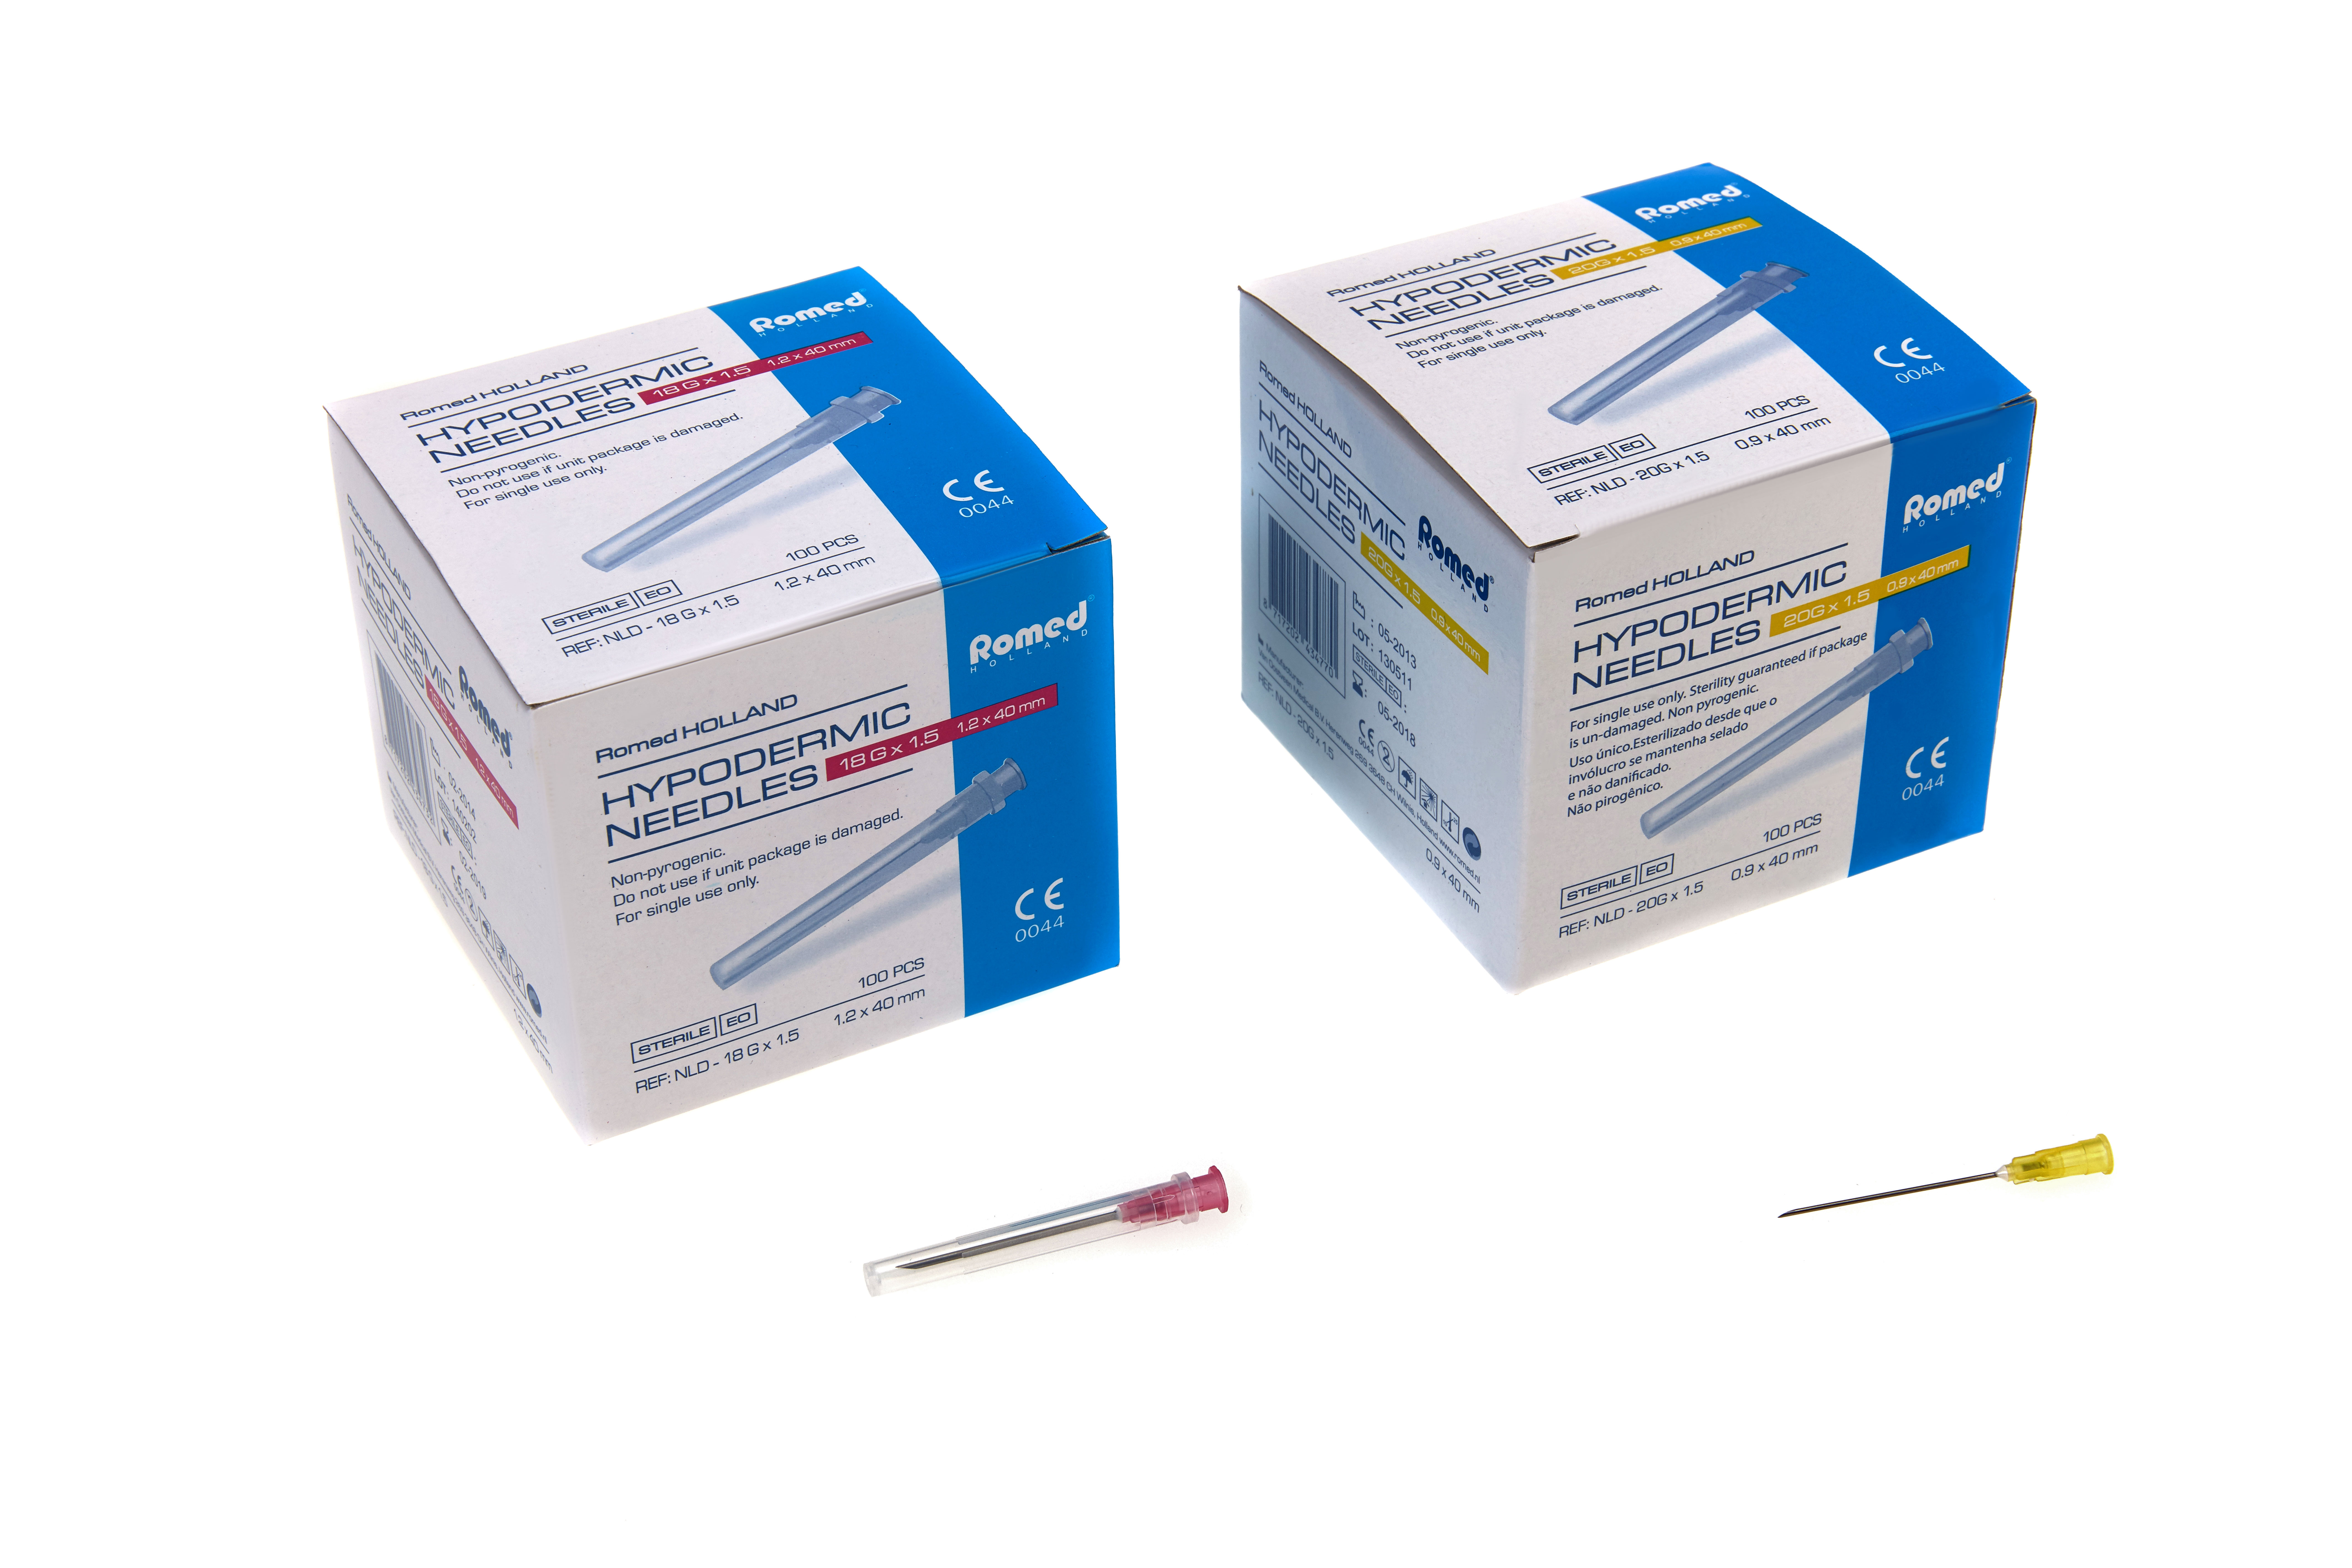 NLD-27GX3/4 Romed hypodermic needles, 27gx3/4", sterile per piece, 100 pcs in an inner box, 50 x 100 pcs = 5.000 pcs in a carton.